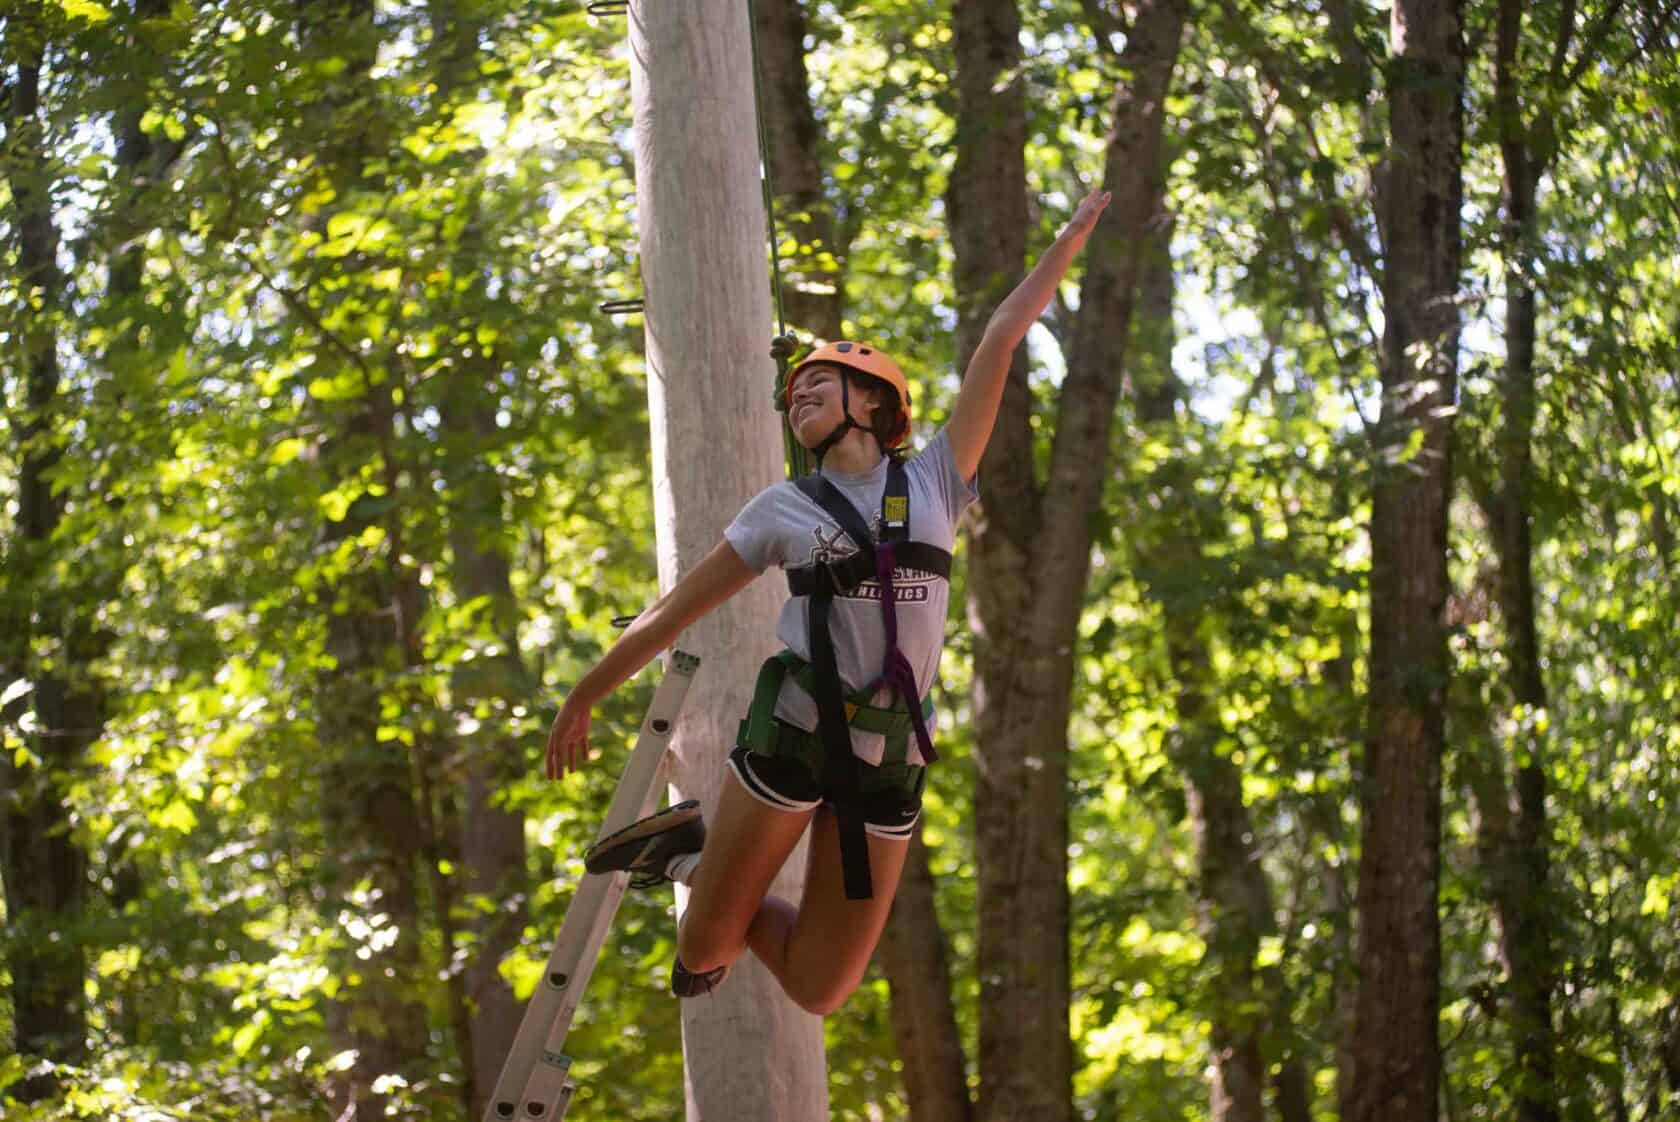 Girl hanging on harness ziplining through the woods.